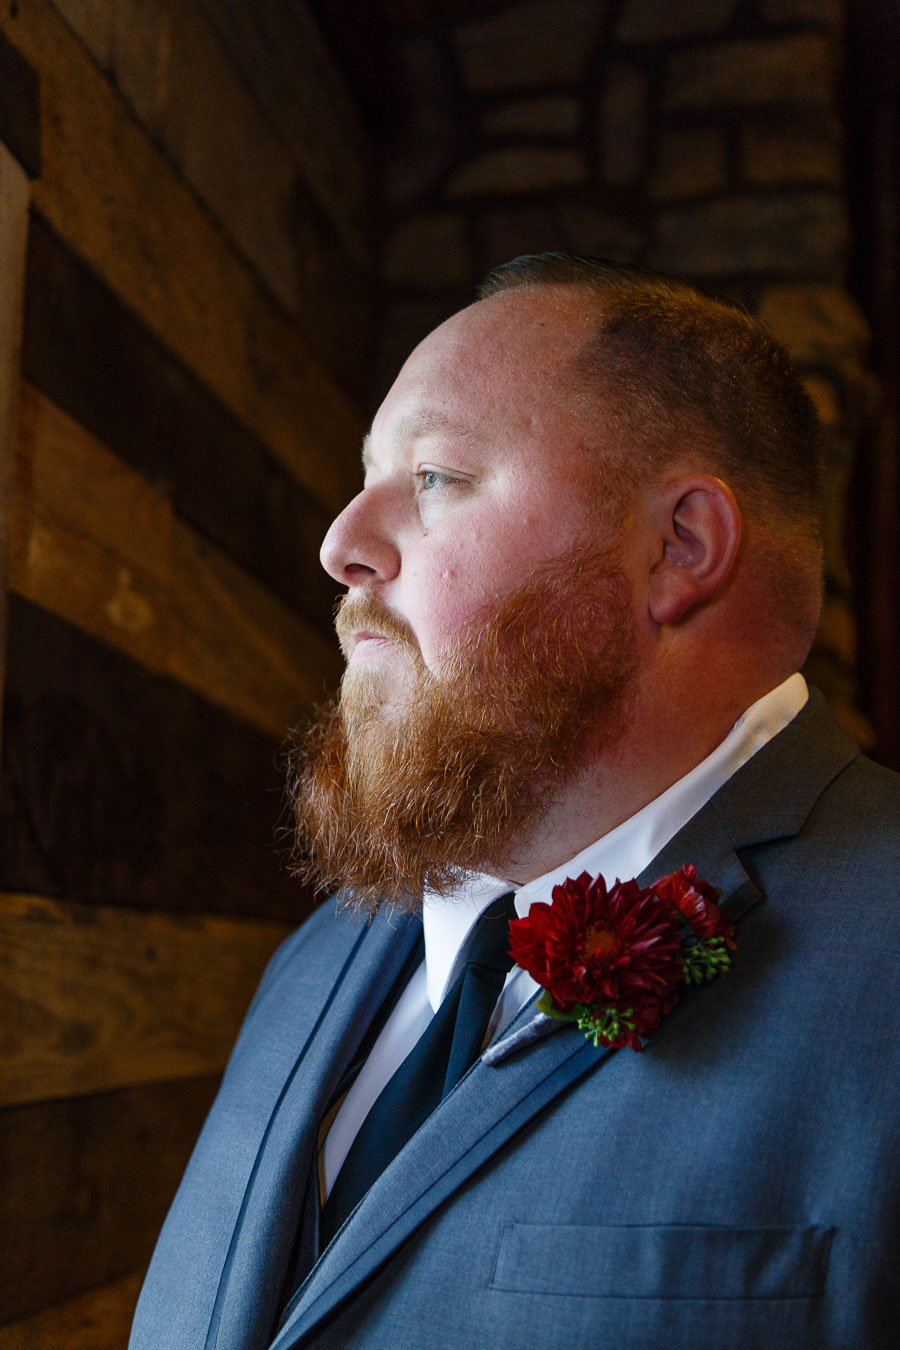 REAL WEDDING | RUSTIC GLAM TEXAS WEDDING | C.Baron Photography | Pretty Pear Bride